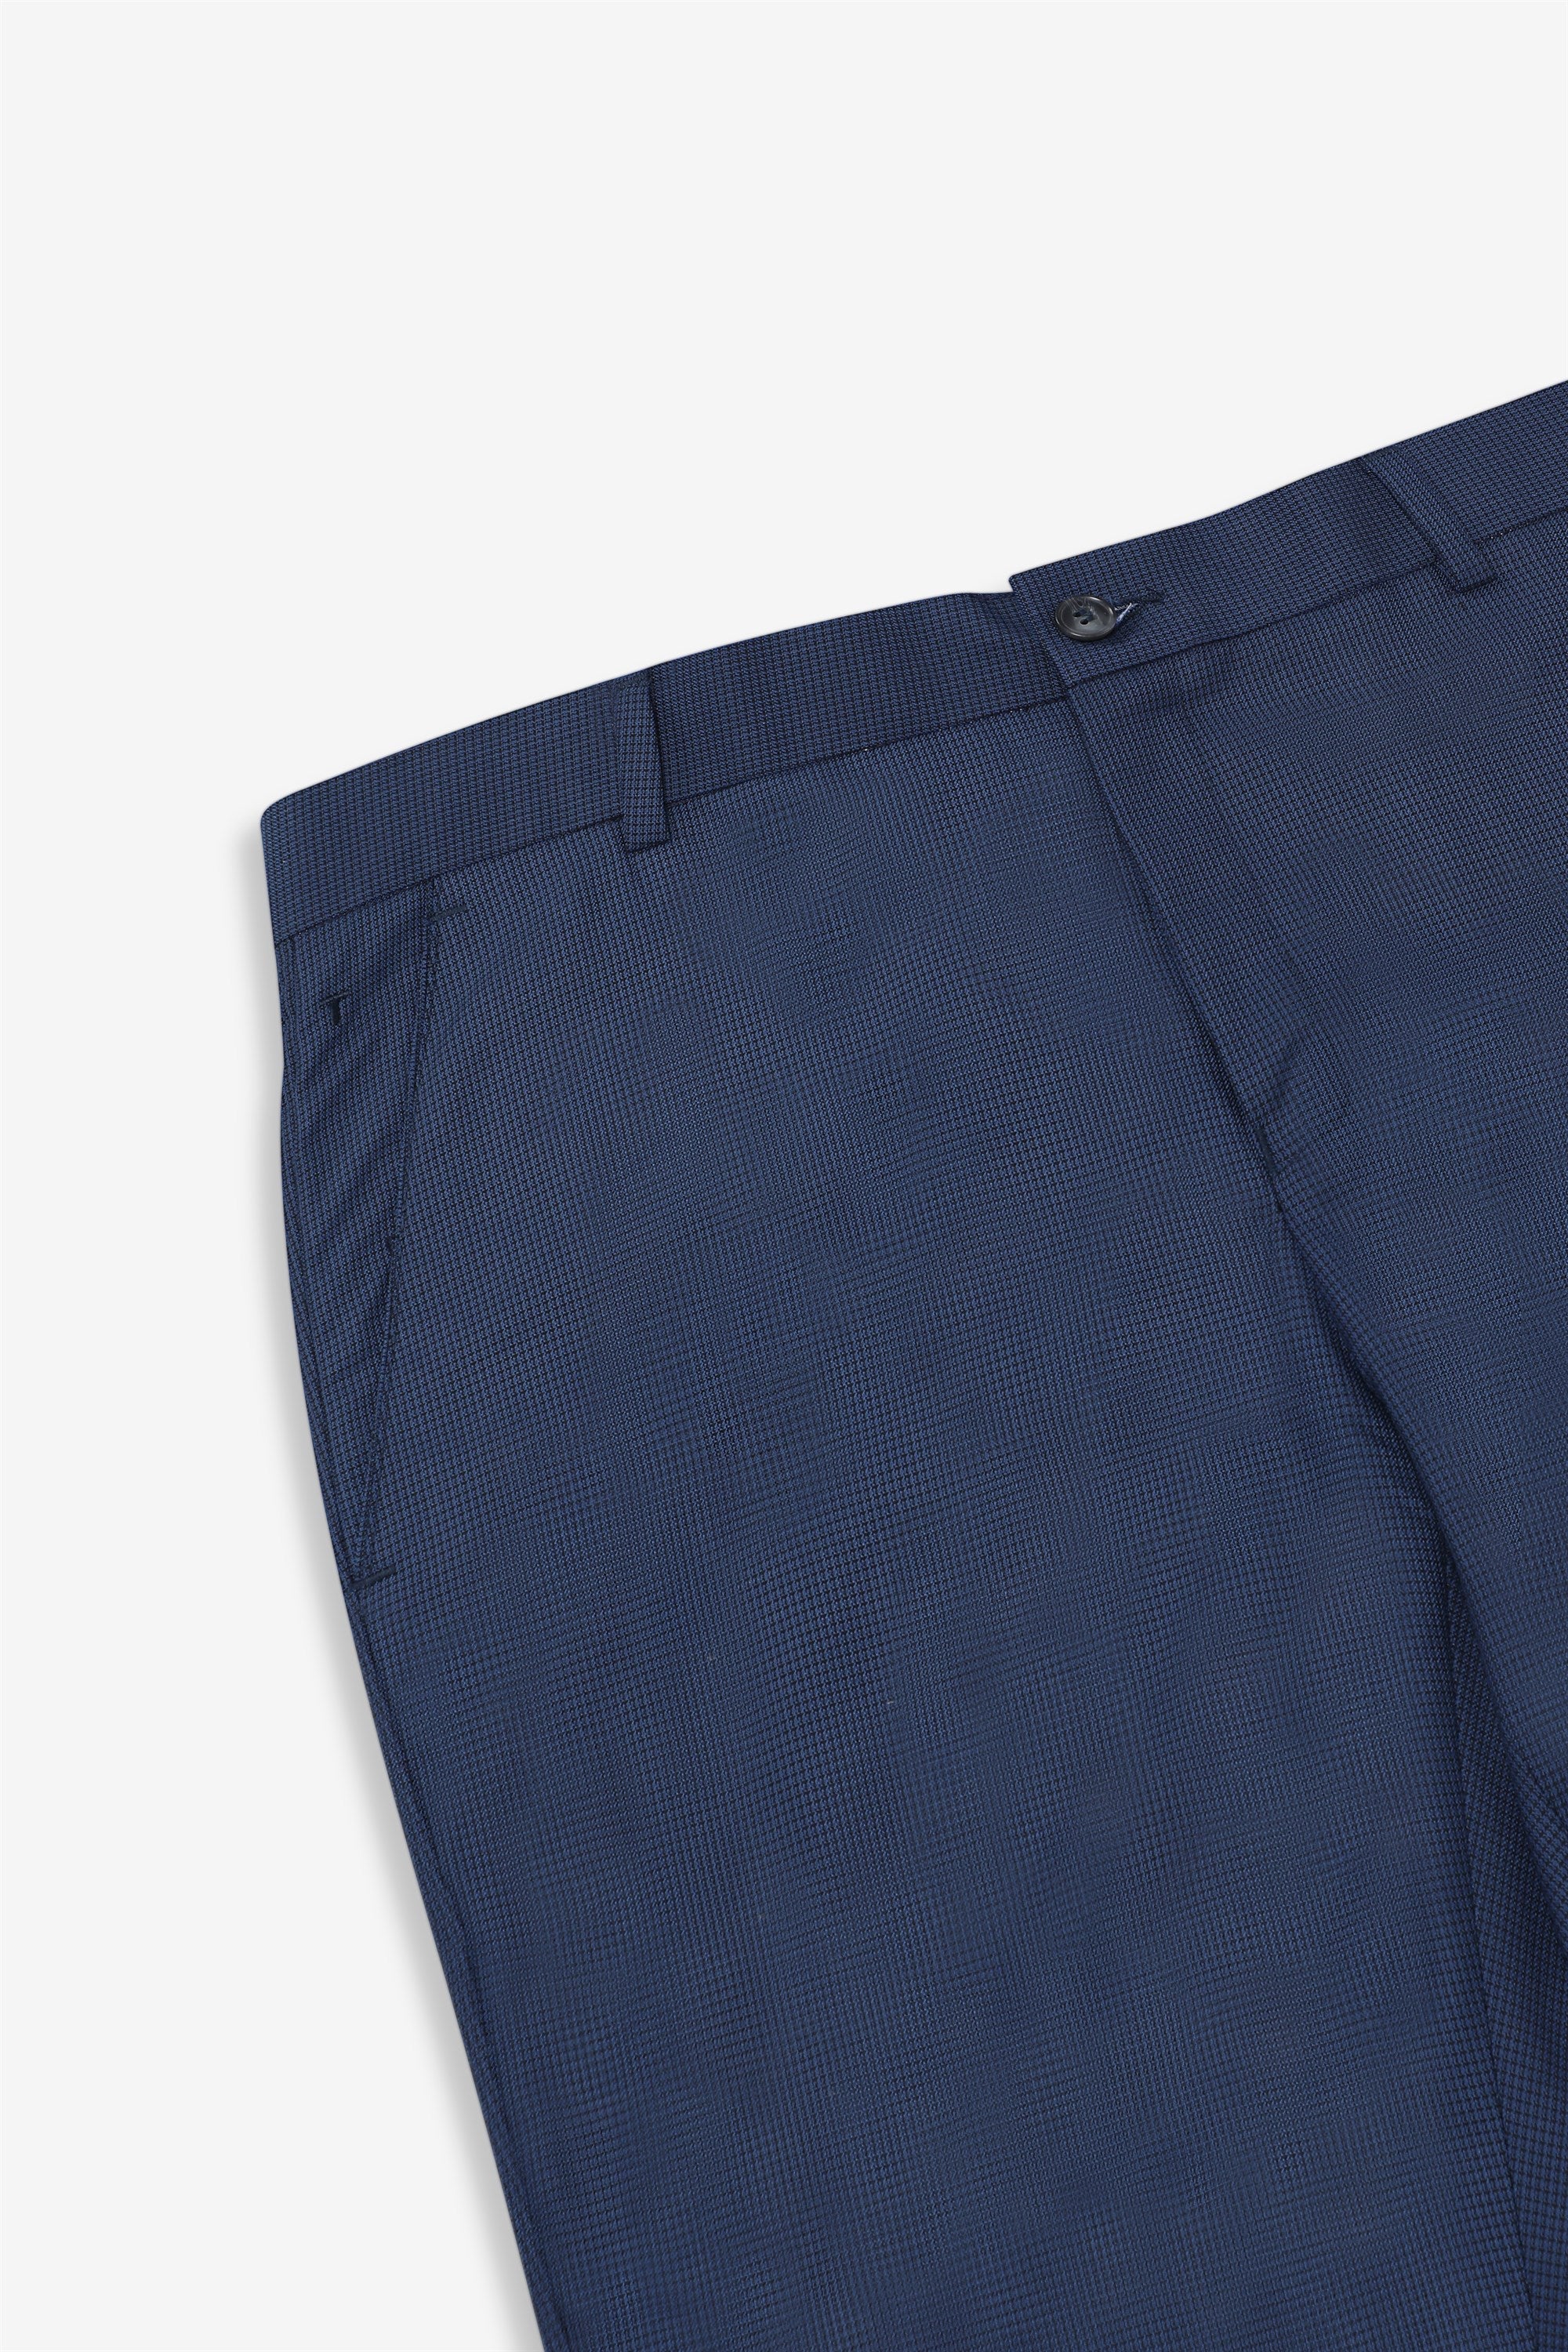 Buy Mens Cotton Linen Navy Blue Trousers Online  Merchant Marine